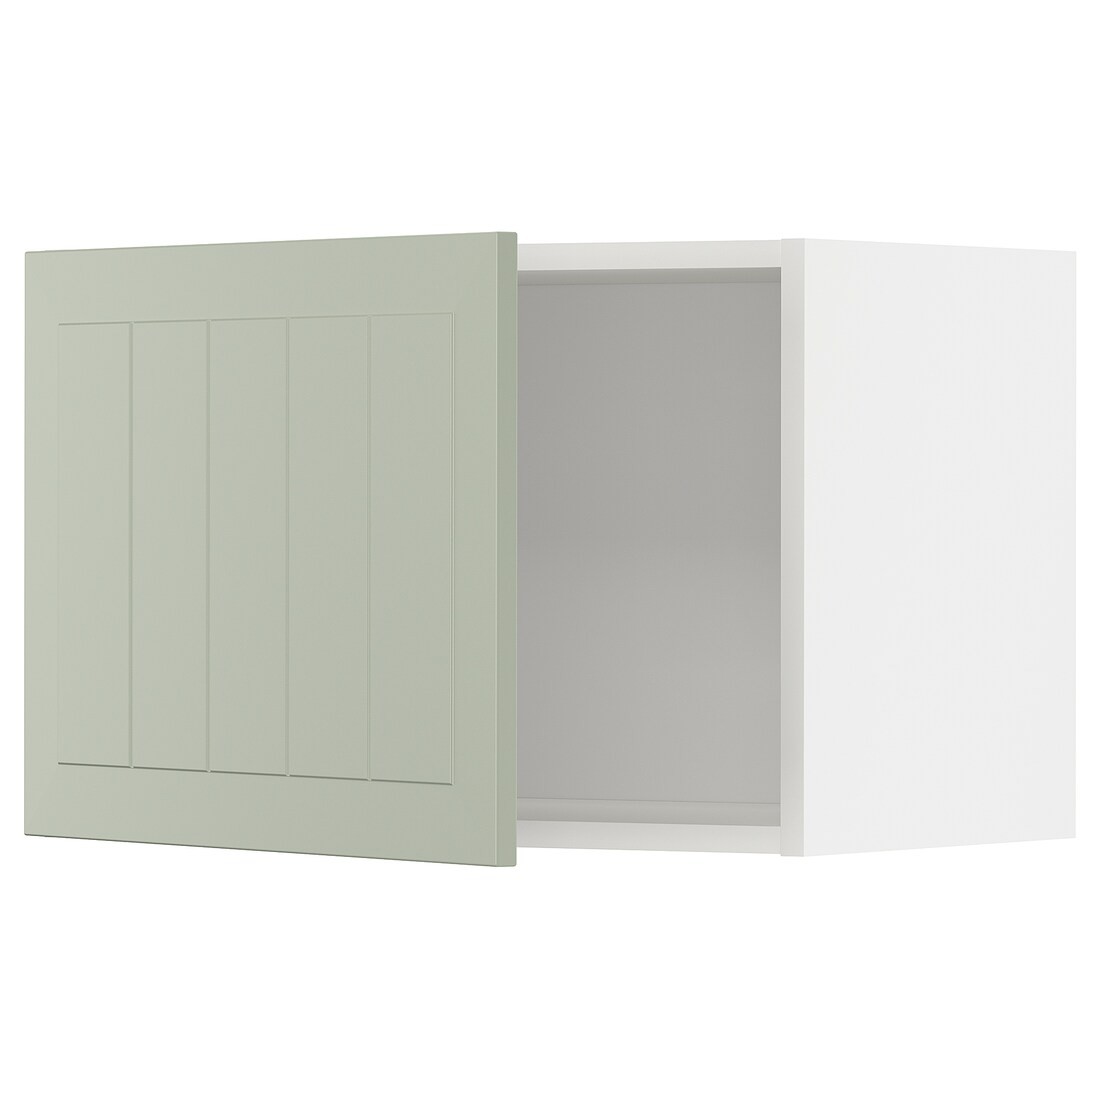 METOD МЕТОД Настенный шкаф, белый / Stensund светло-зеленый, 60x40 см